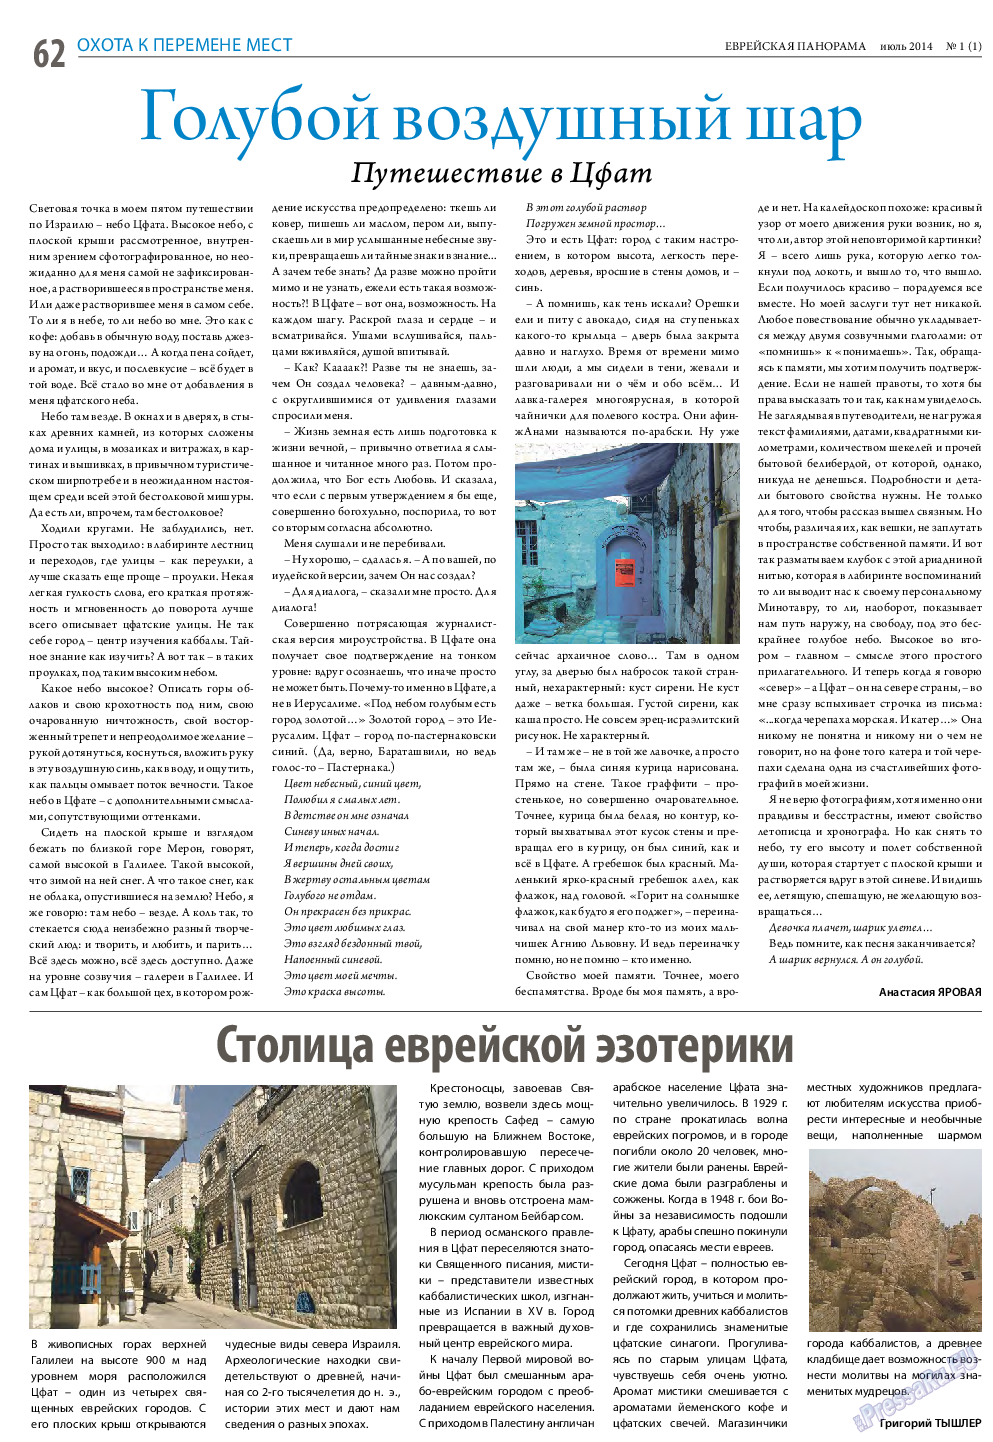 Еврейская панорама, газета. 2014 №1 стр.62